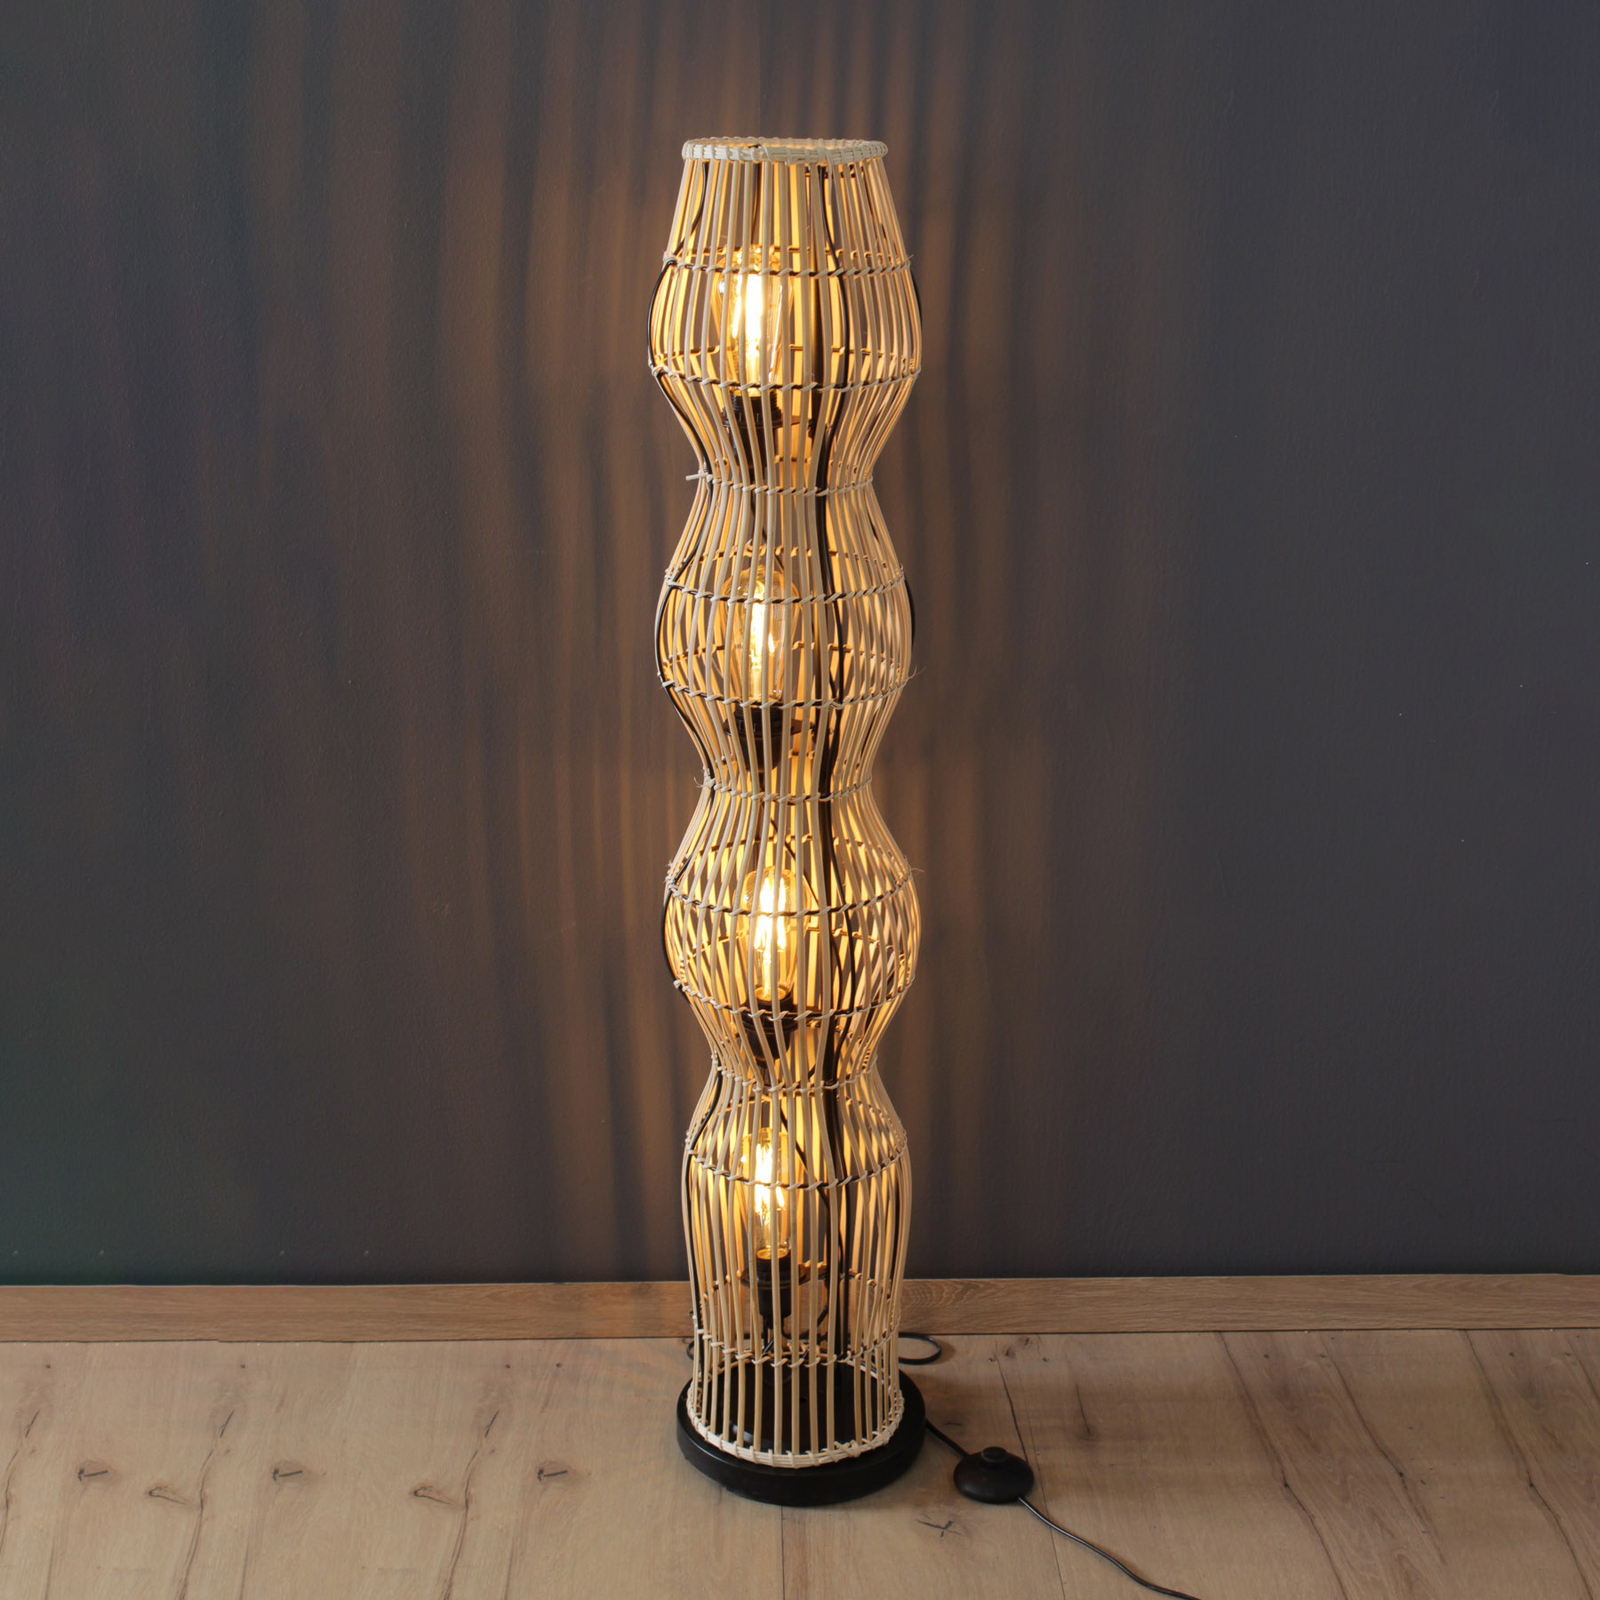 Bamboo floor lamp, natural